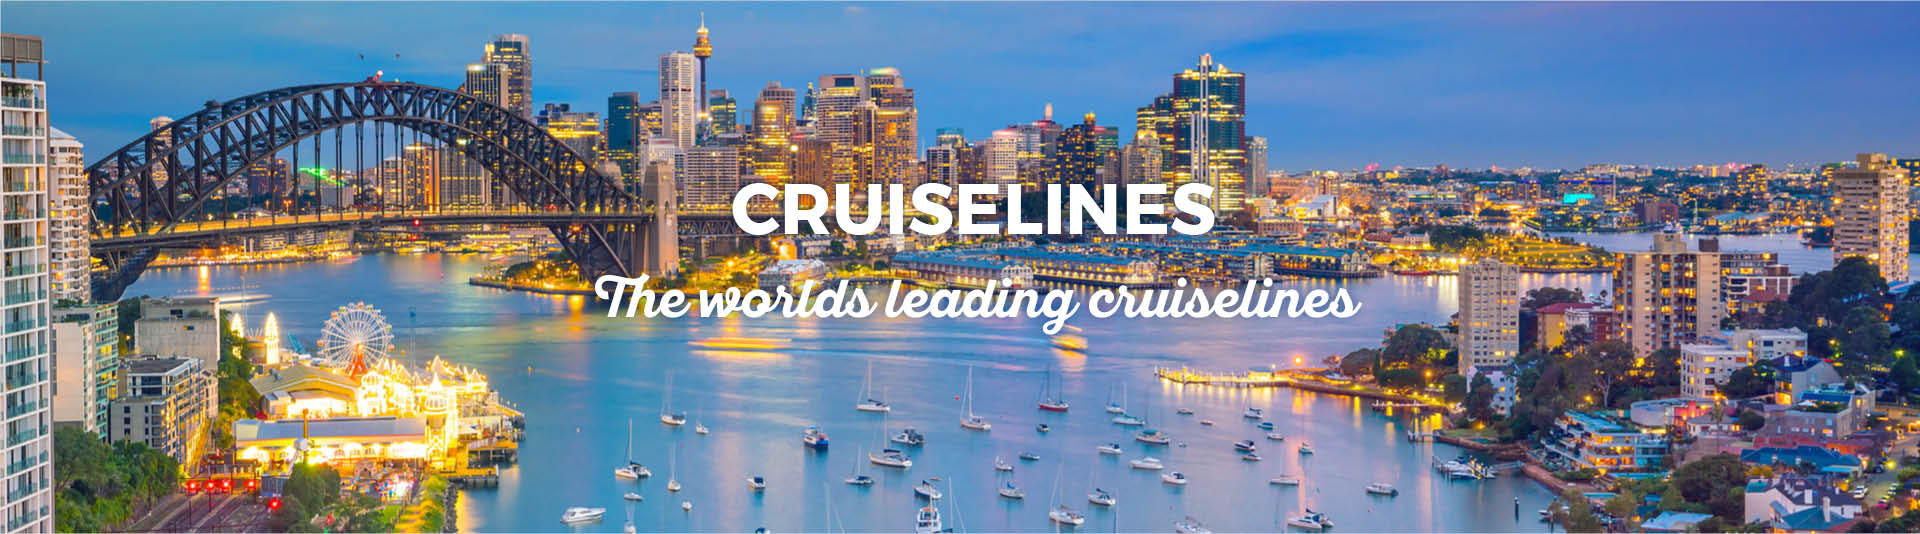 cruise-offers-cruiselines.jpg